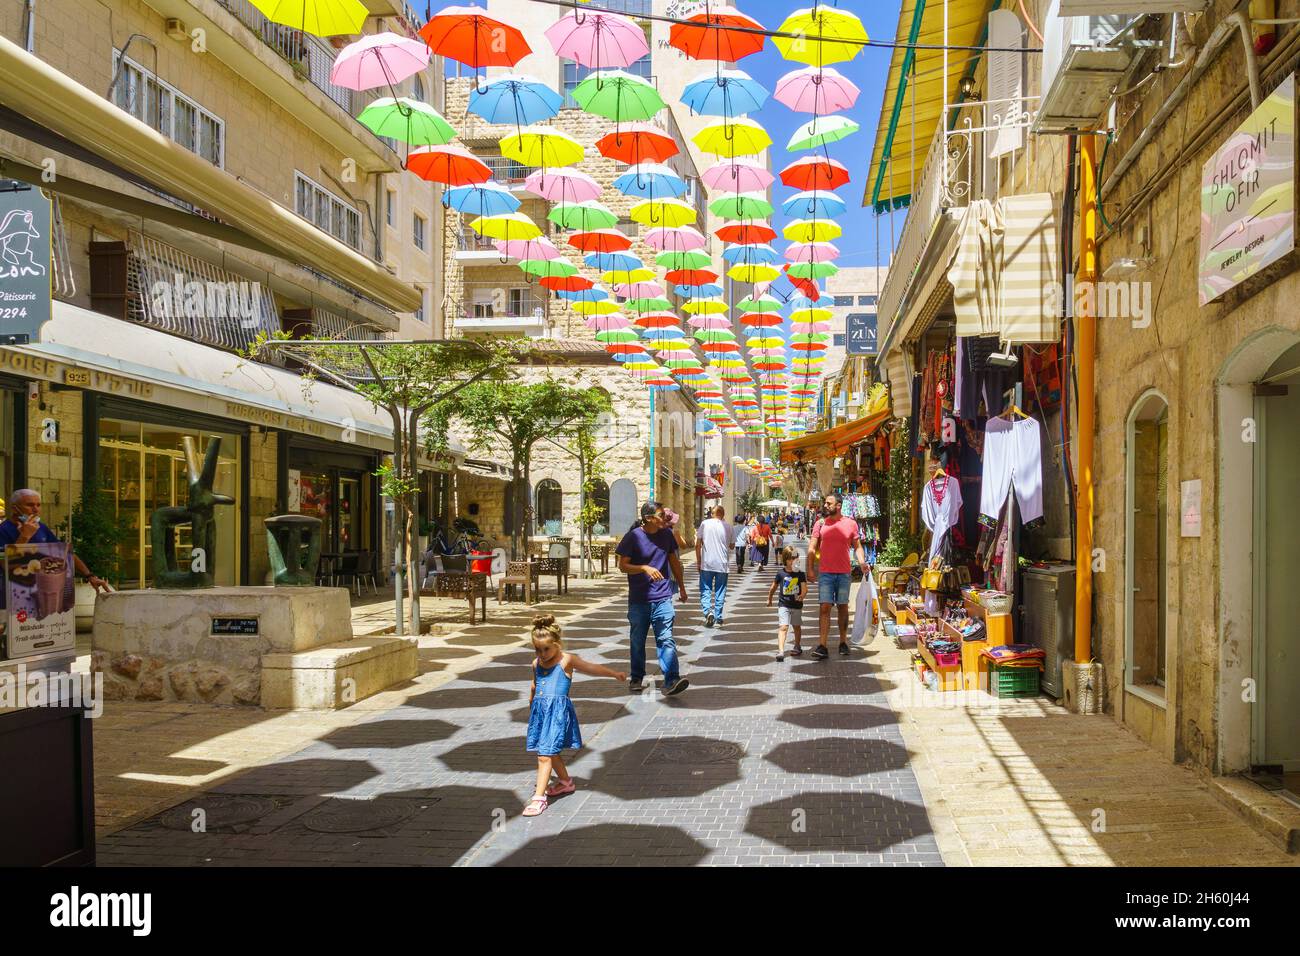 Jerusalem, Israel - August 30, 2021: Pedestrians and colorful umbrellas (parasols), in Yoel Moshe Solomon Street, the historic Nachalat Shiva neighbor Stock Photo